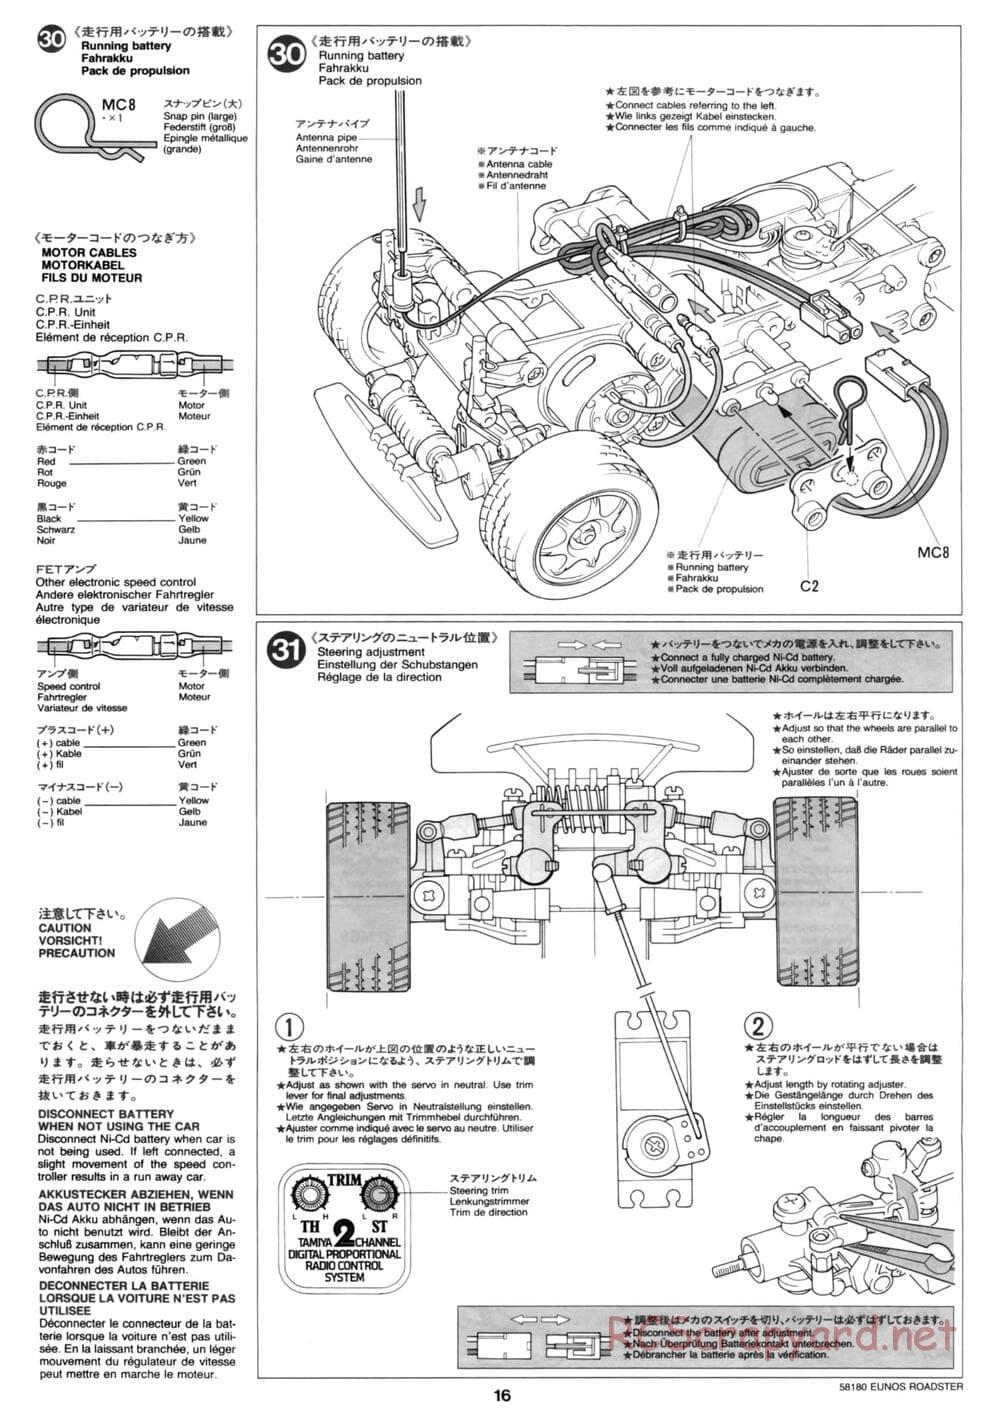 Tamiya - Eunos Roadster - M02M Chassis - Manual - Page 16